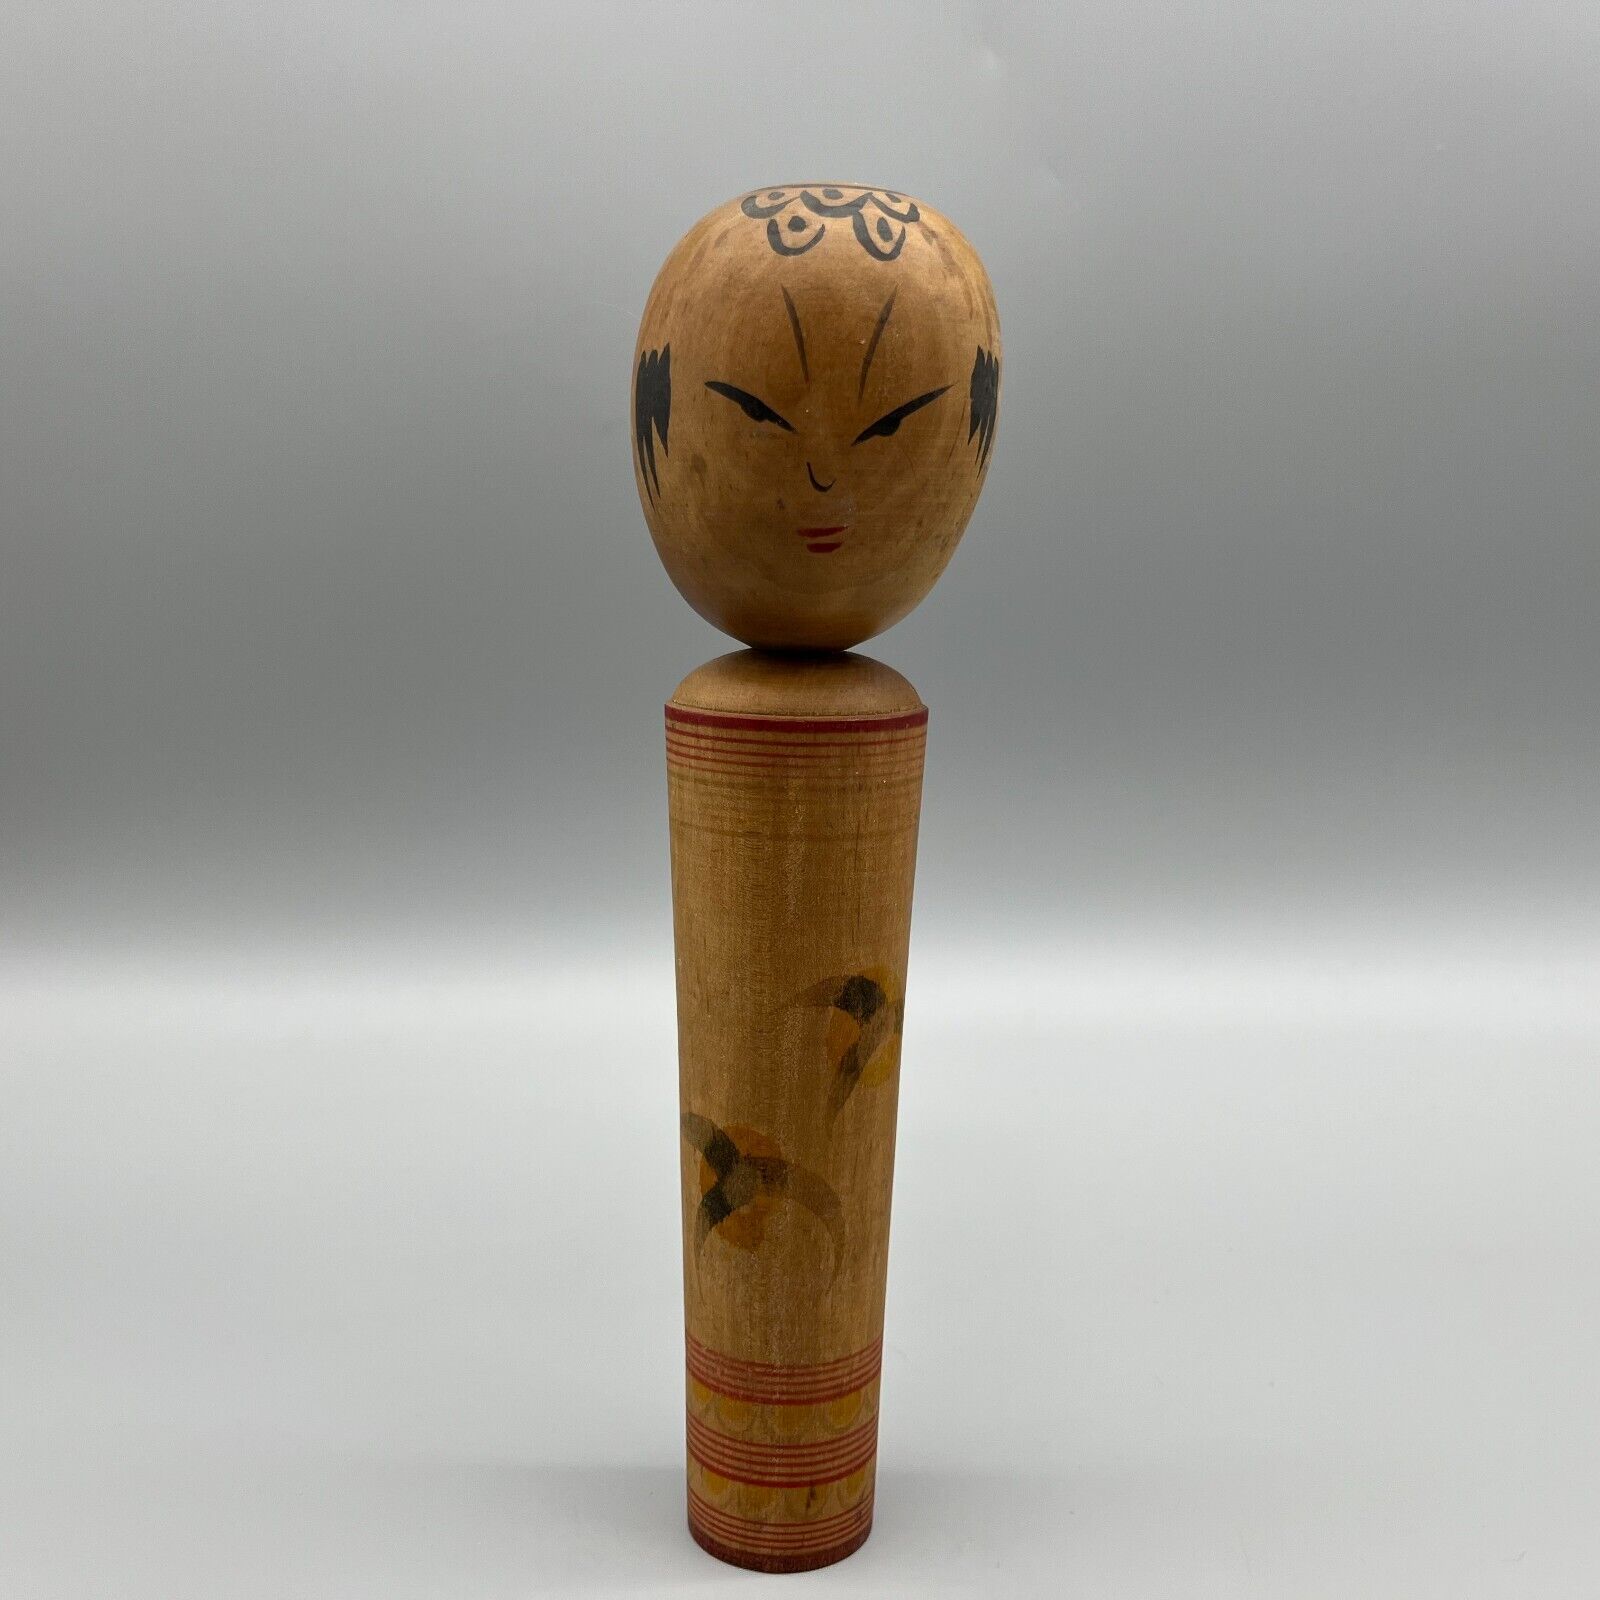 24cm Japanese Wooden Doll Kokeshi Vintage by Towada Hachinotaro Seisaku Signed